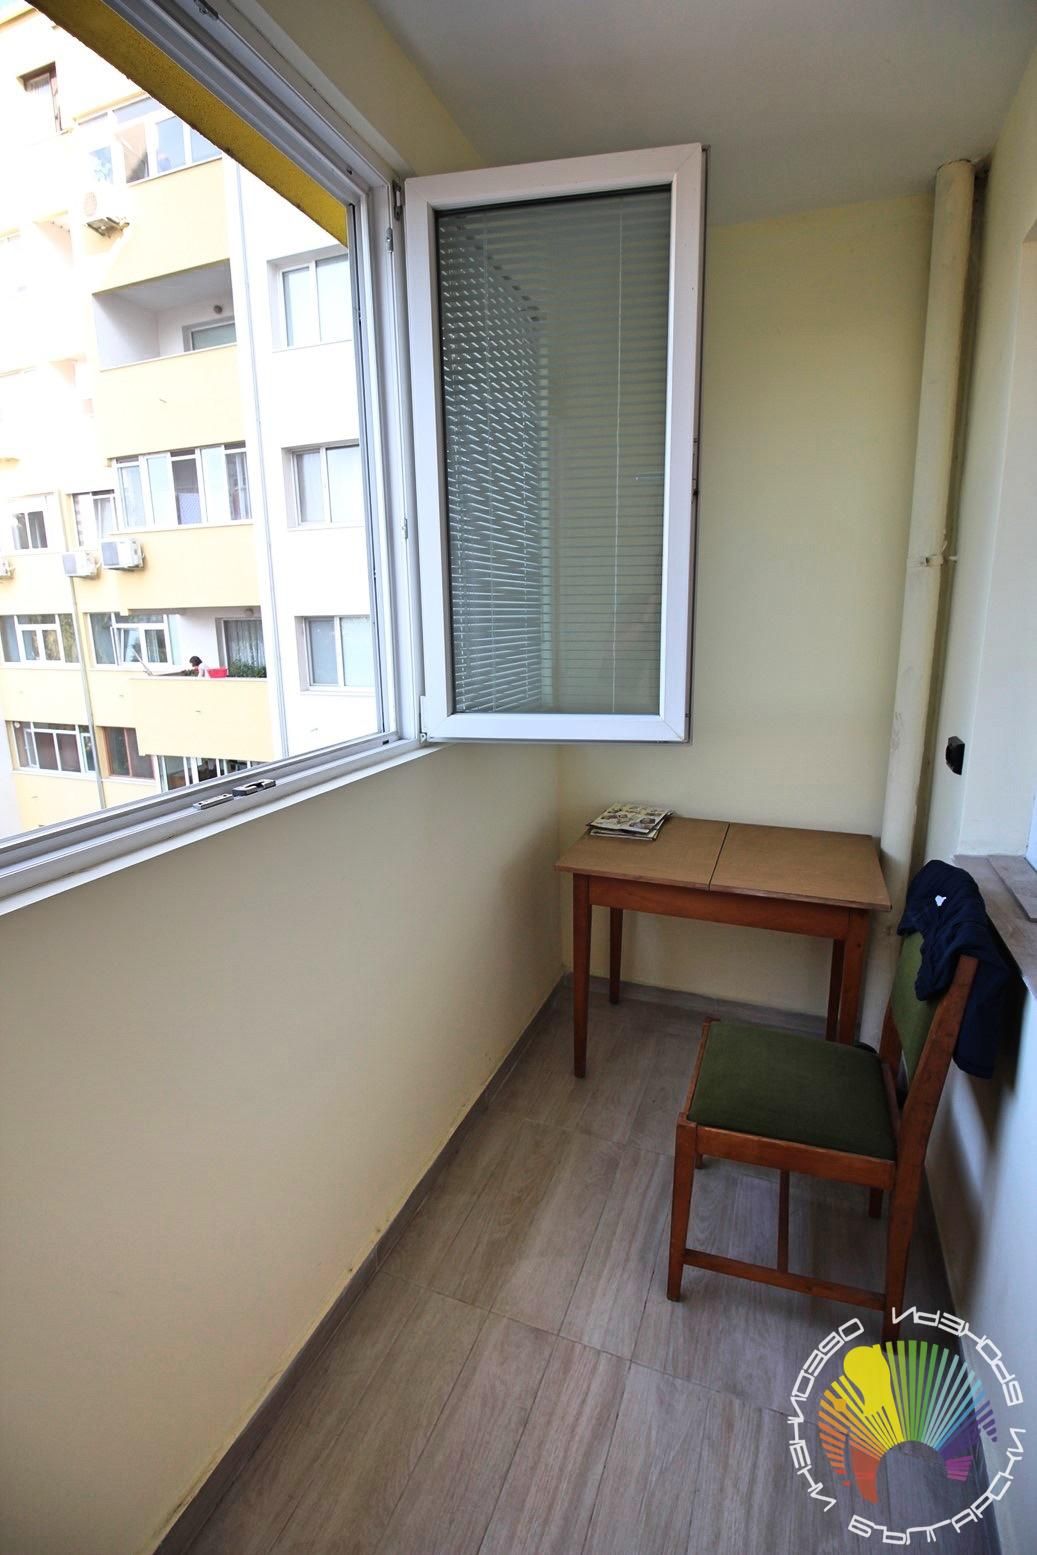 Братя Миладинови двустаен апартамент обзаведен